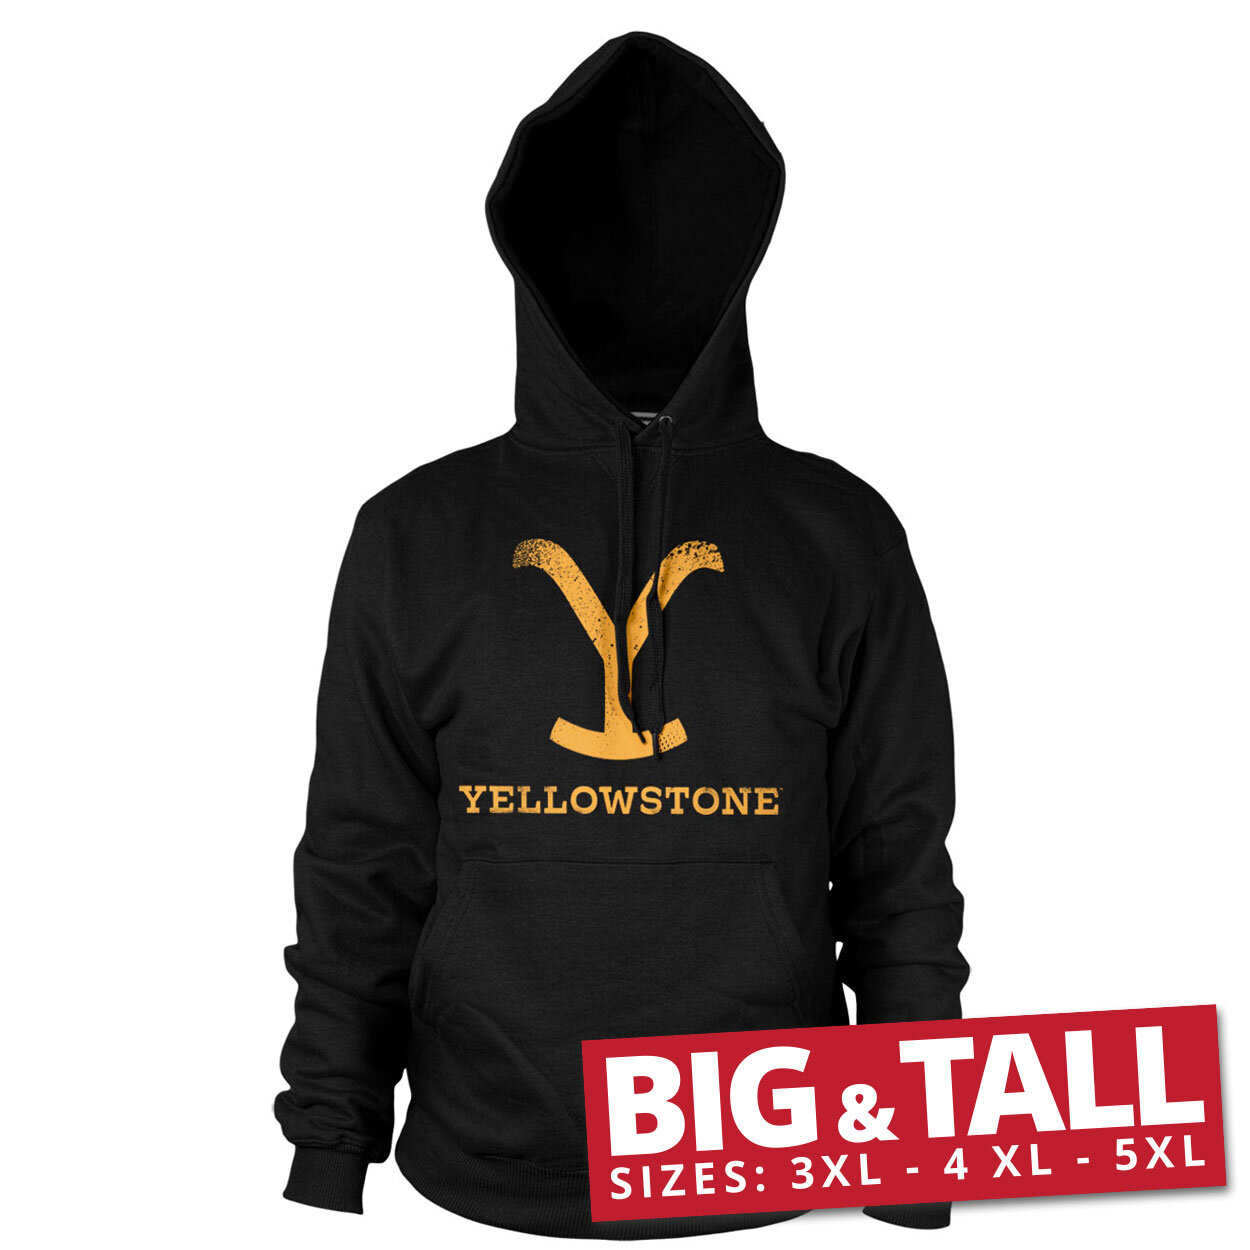 Yellowstone Big & Tall Hoodie